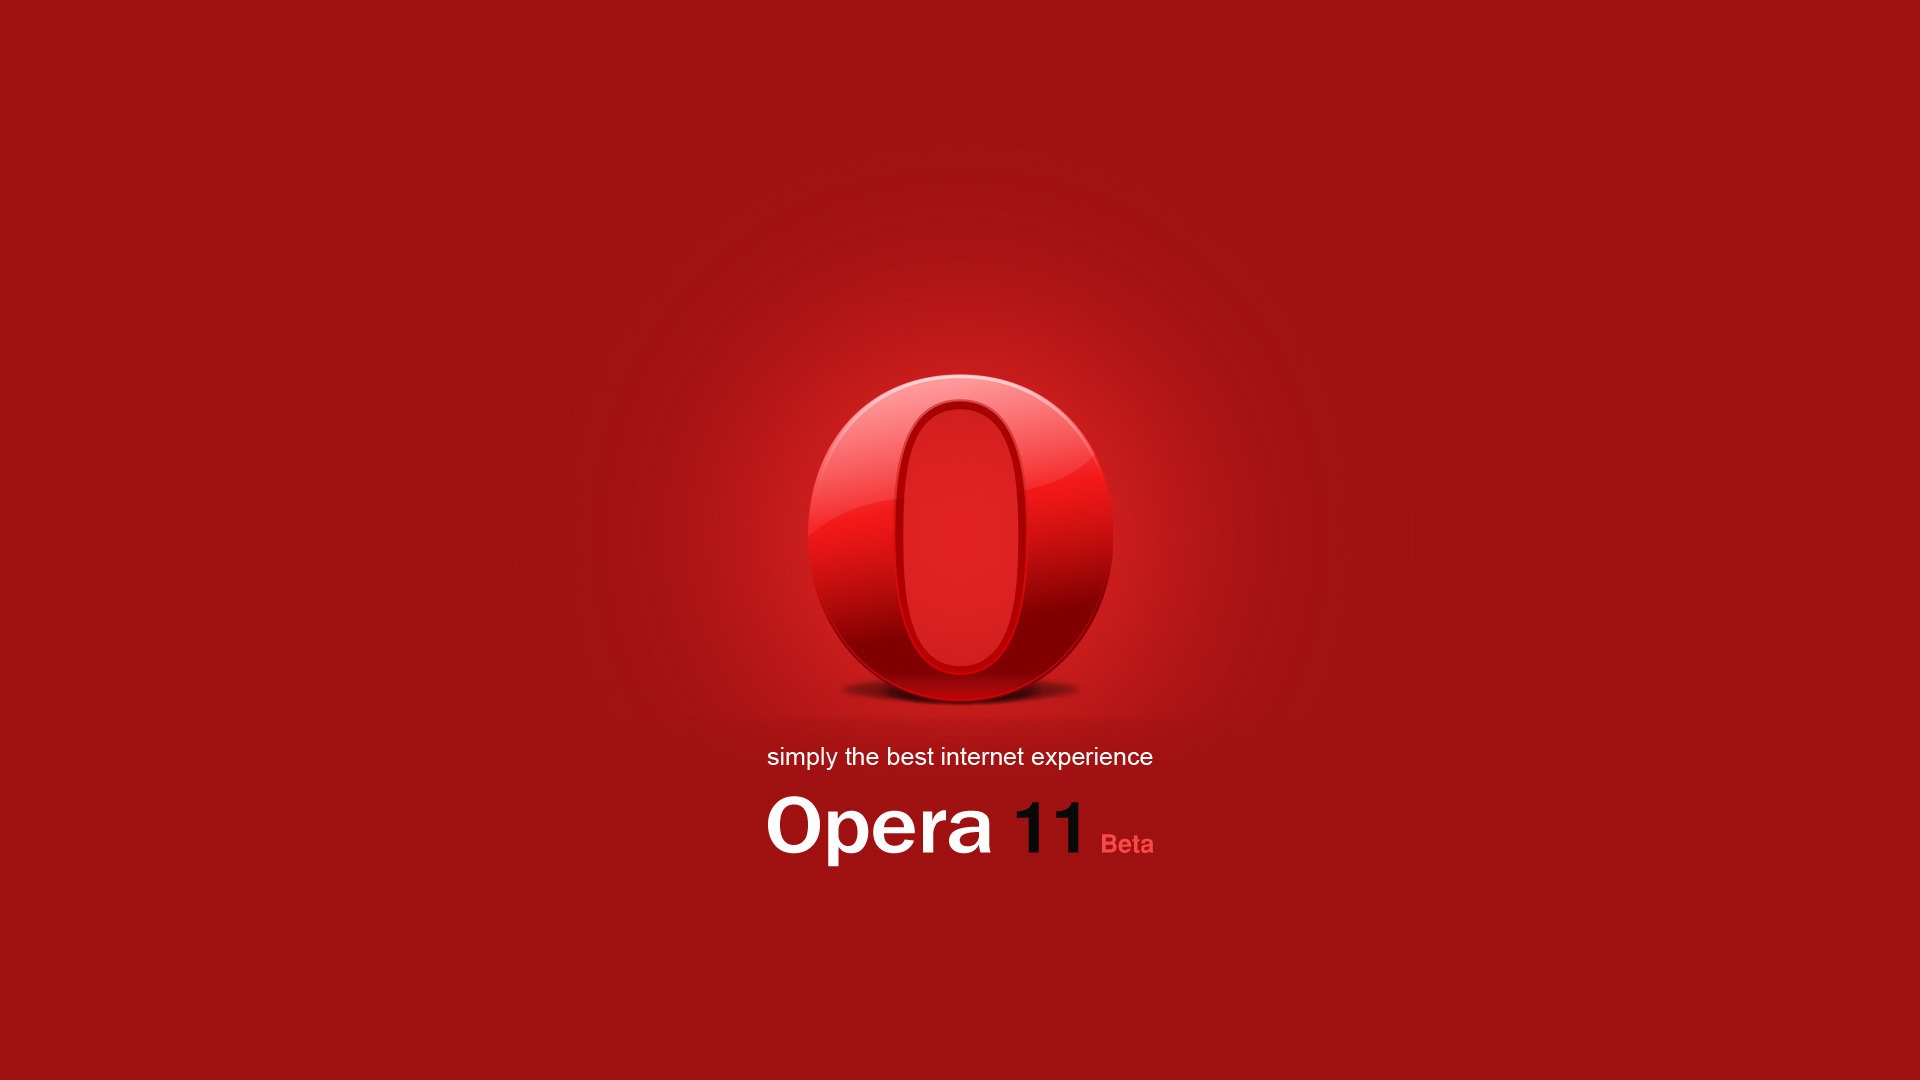 Opera 11 Beta for 1920 x 1080 HDTV 1080p resolution